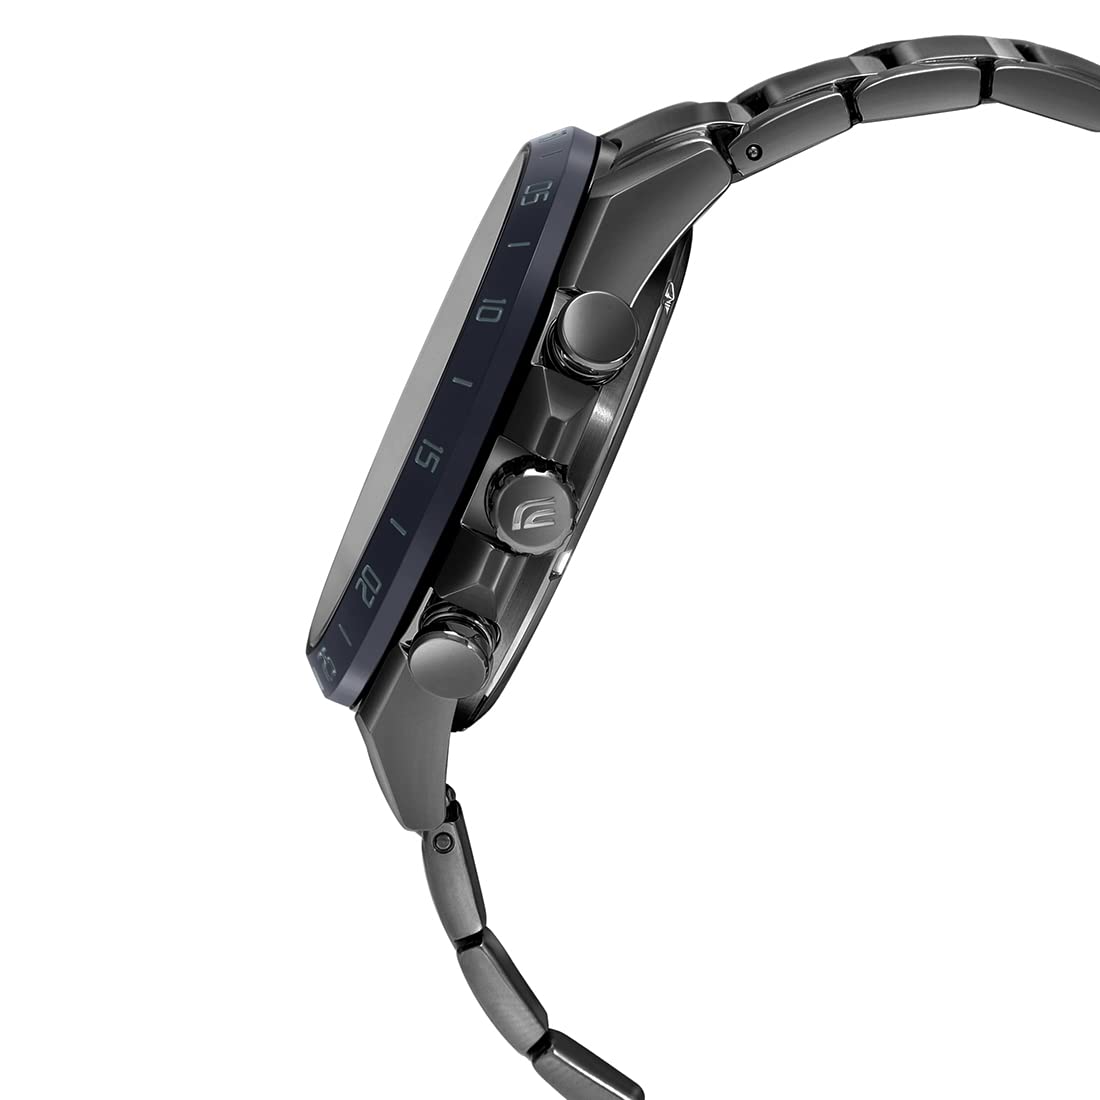 Casio Stainless Steel Edifice Analog Black Dial Men's Watch-Eqs-940Dc-1Bvudf